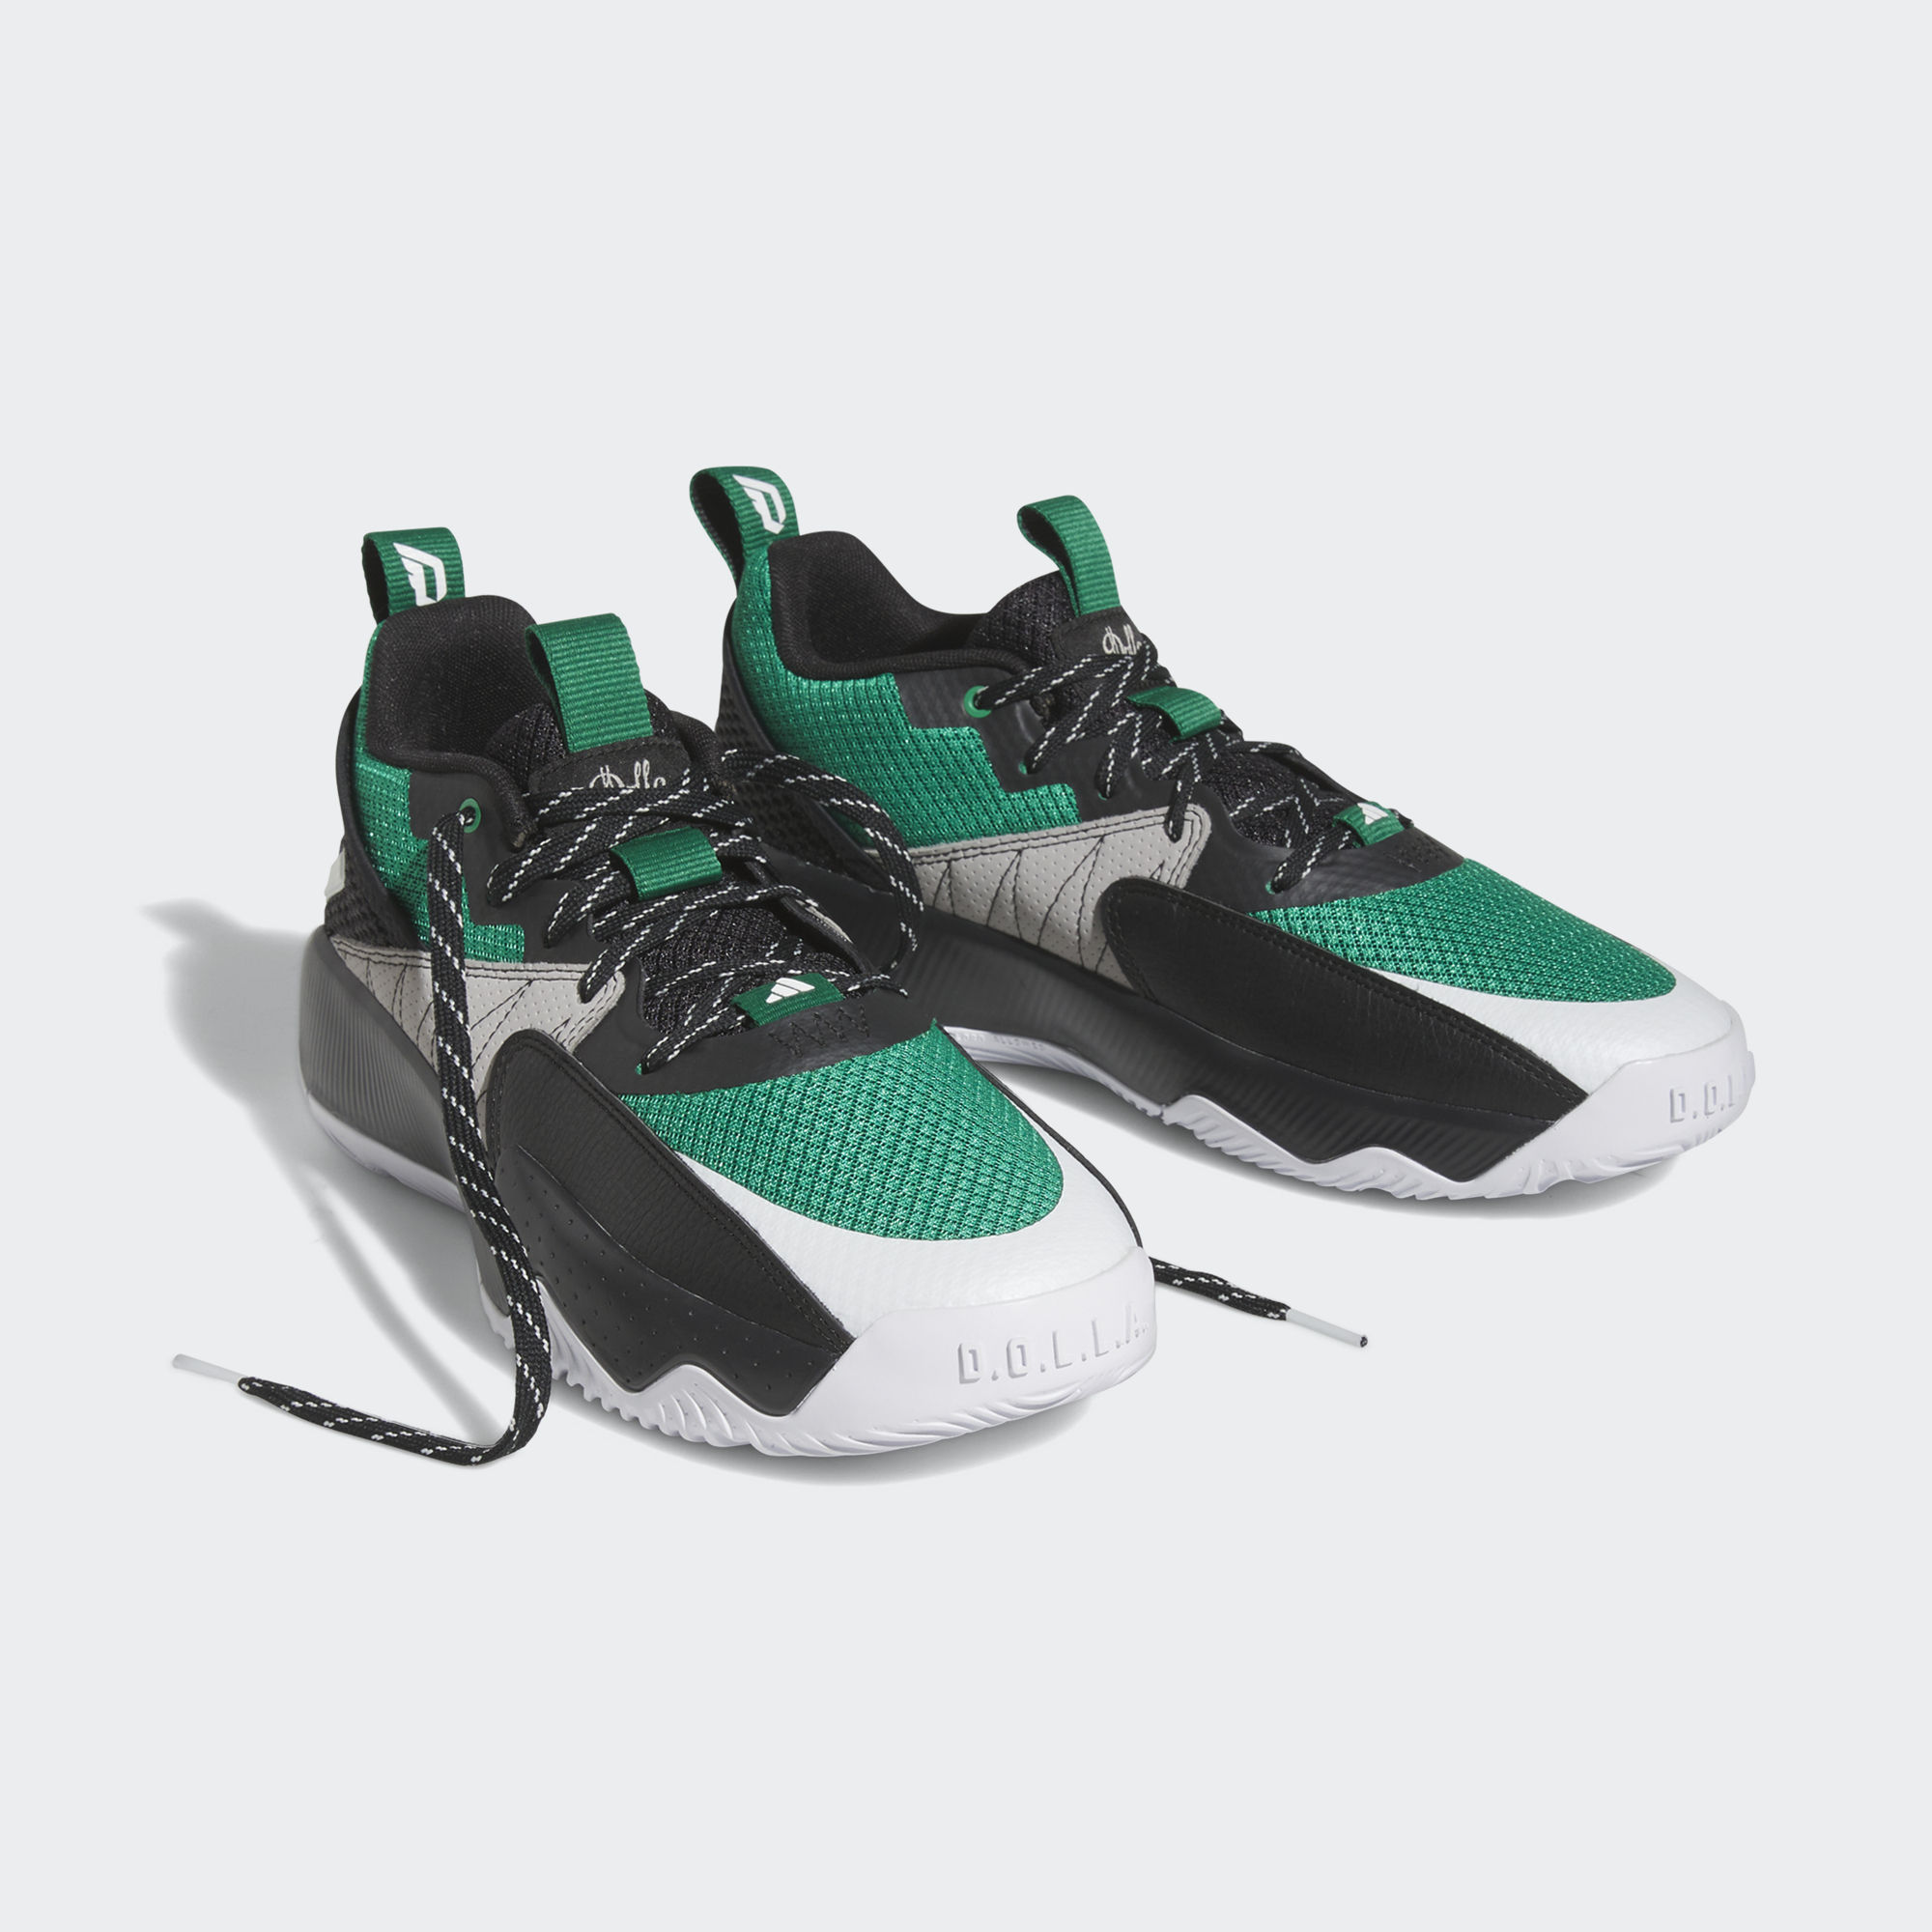 DAME EXTPLY 2.0 籃球鞋- 綠色| 男子| adidas(愛迪達)香港官方網上商店